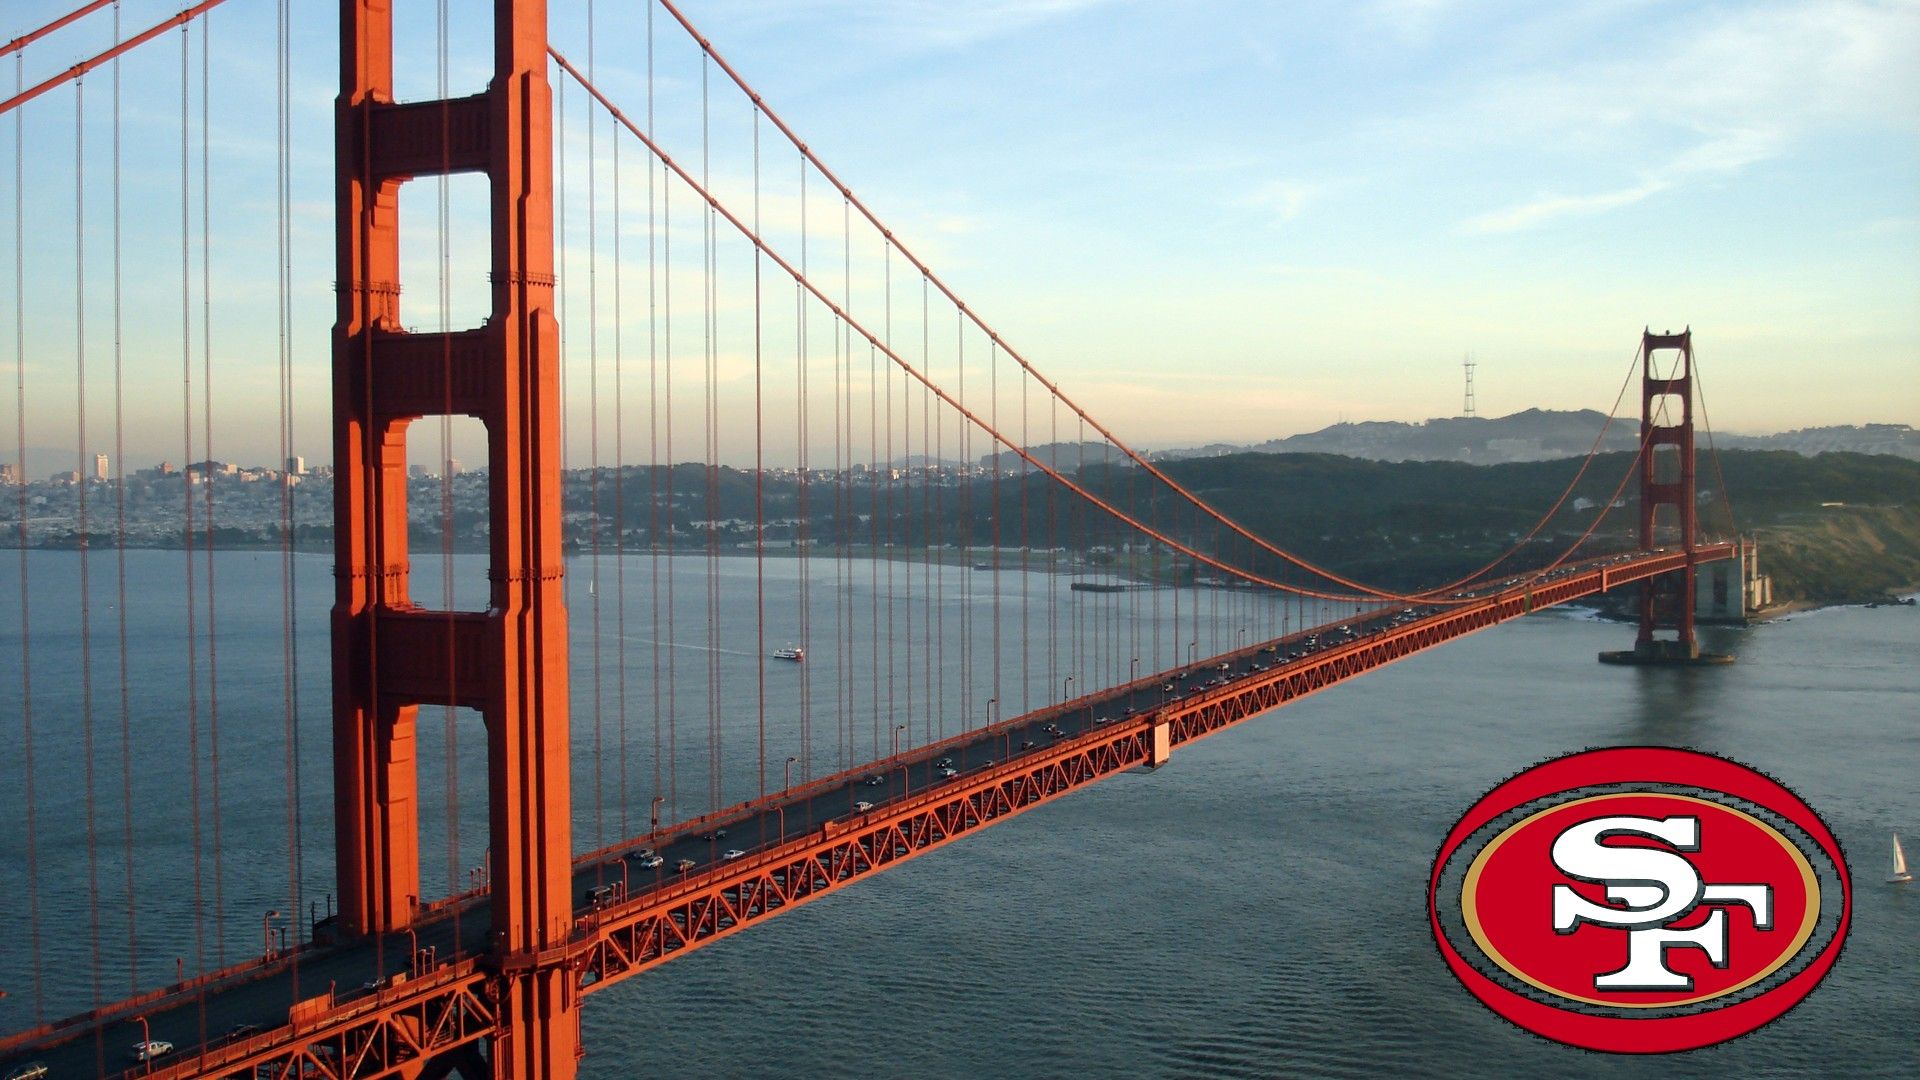 San Francisco 49ers / Nfl 1920x1080 Hd Images